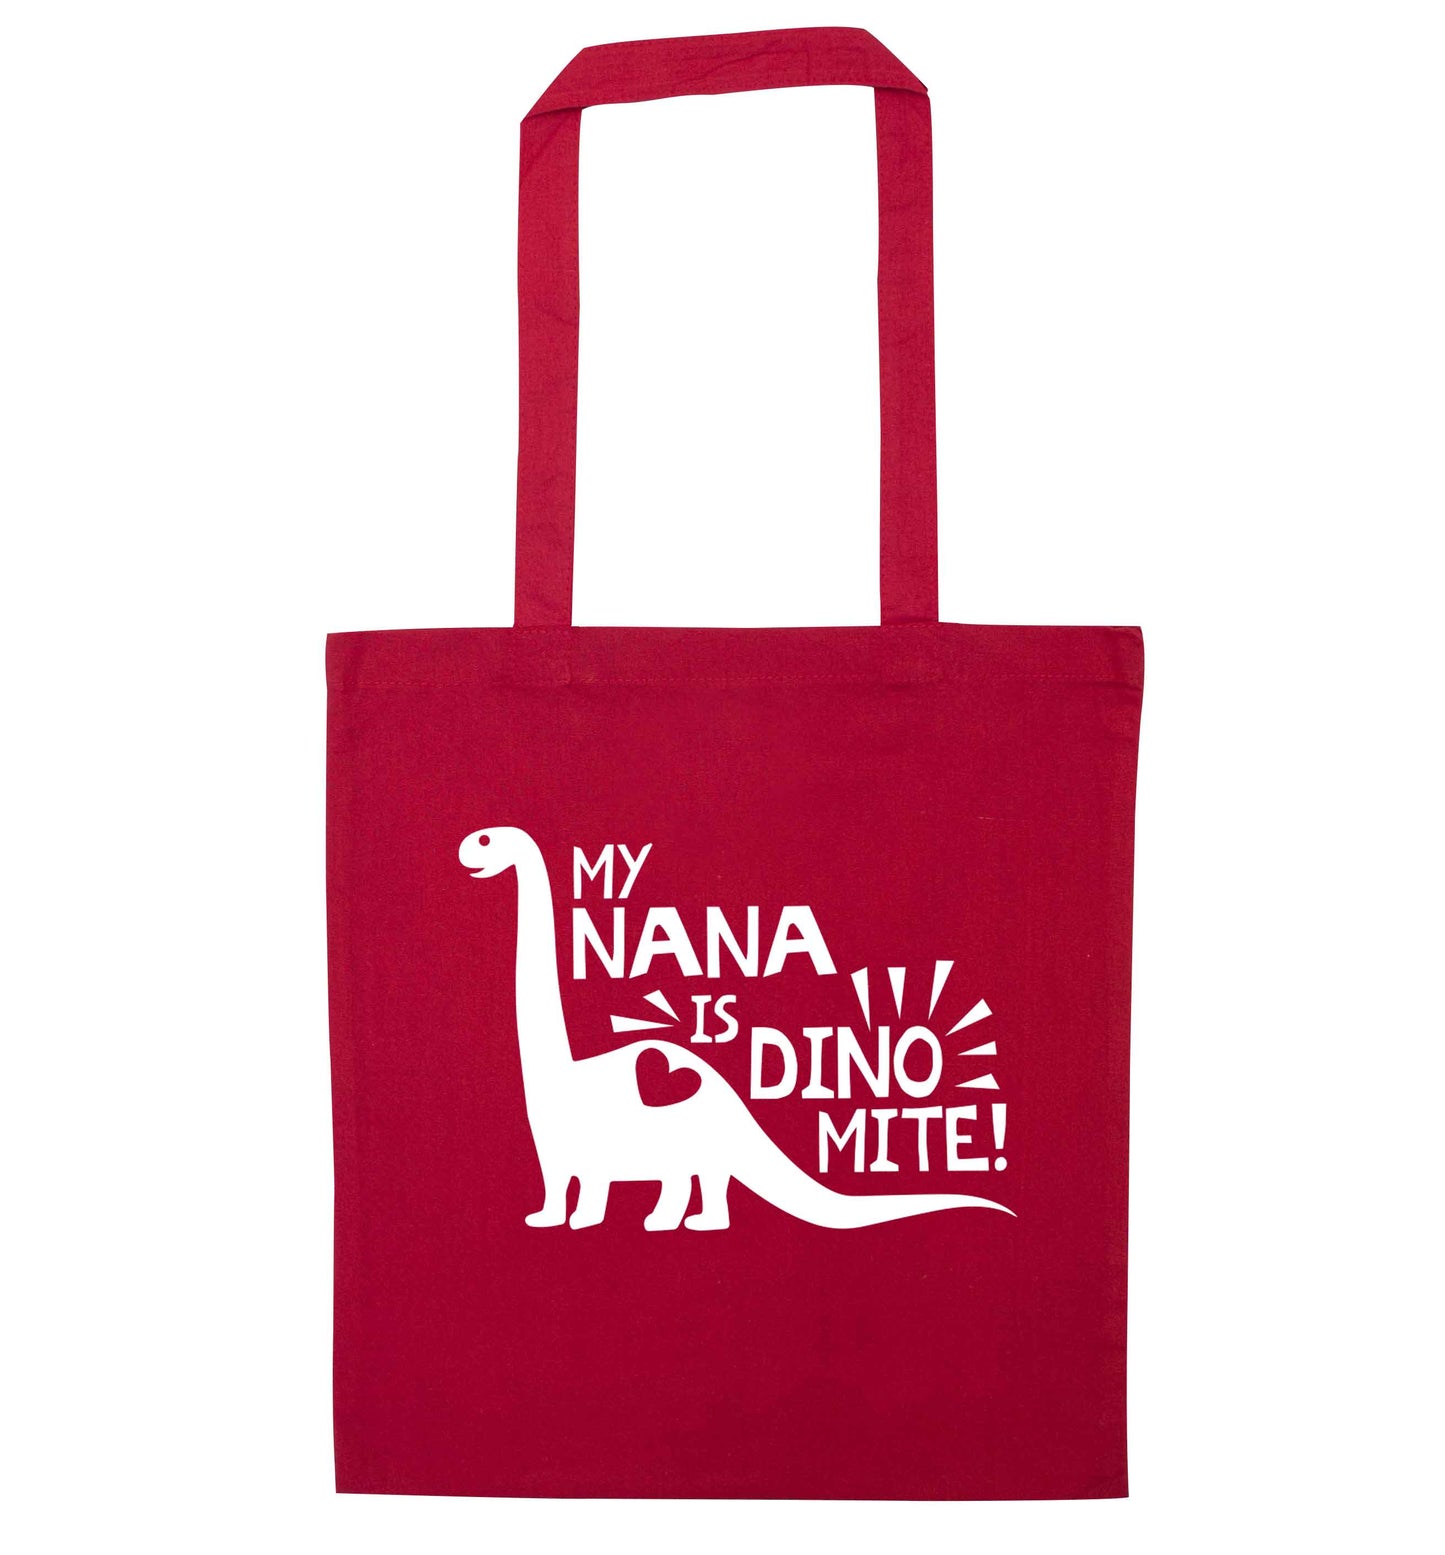 My nana is dinomite! red tote bag